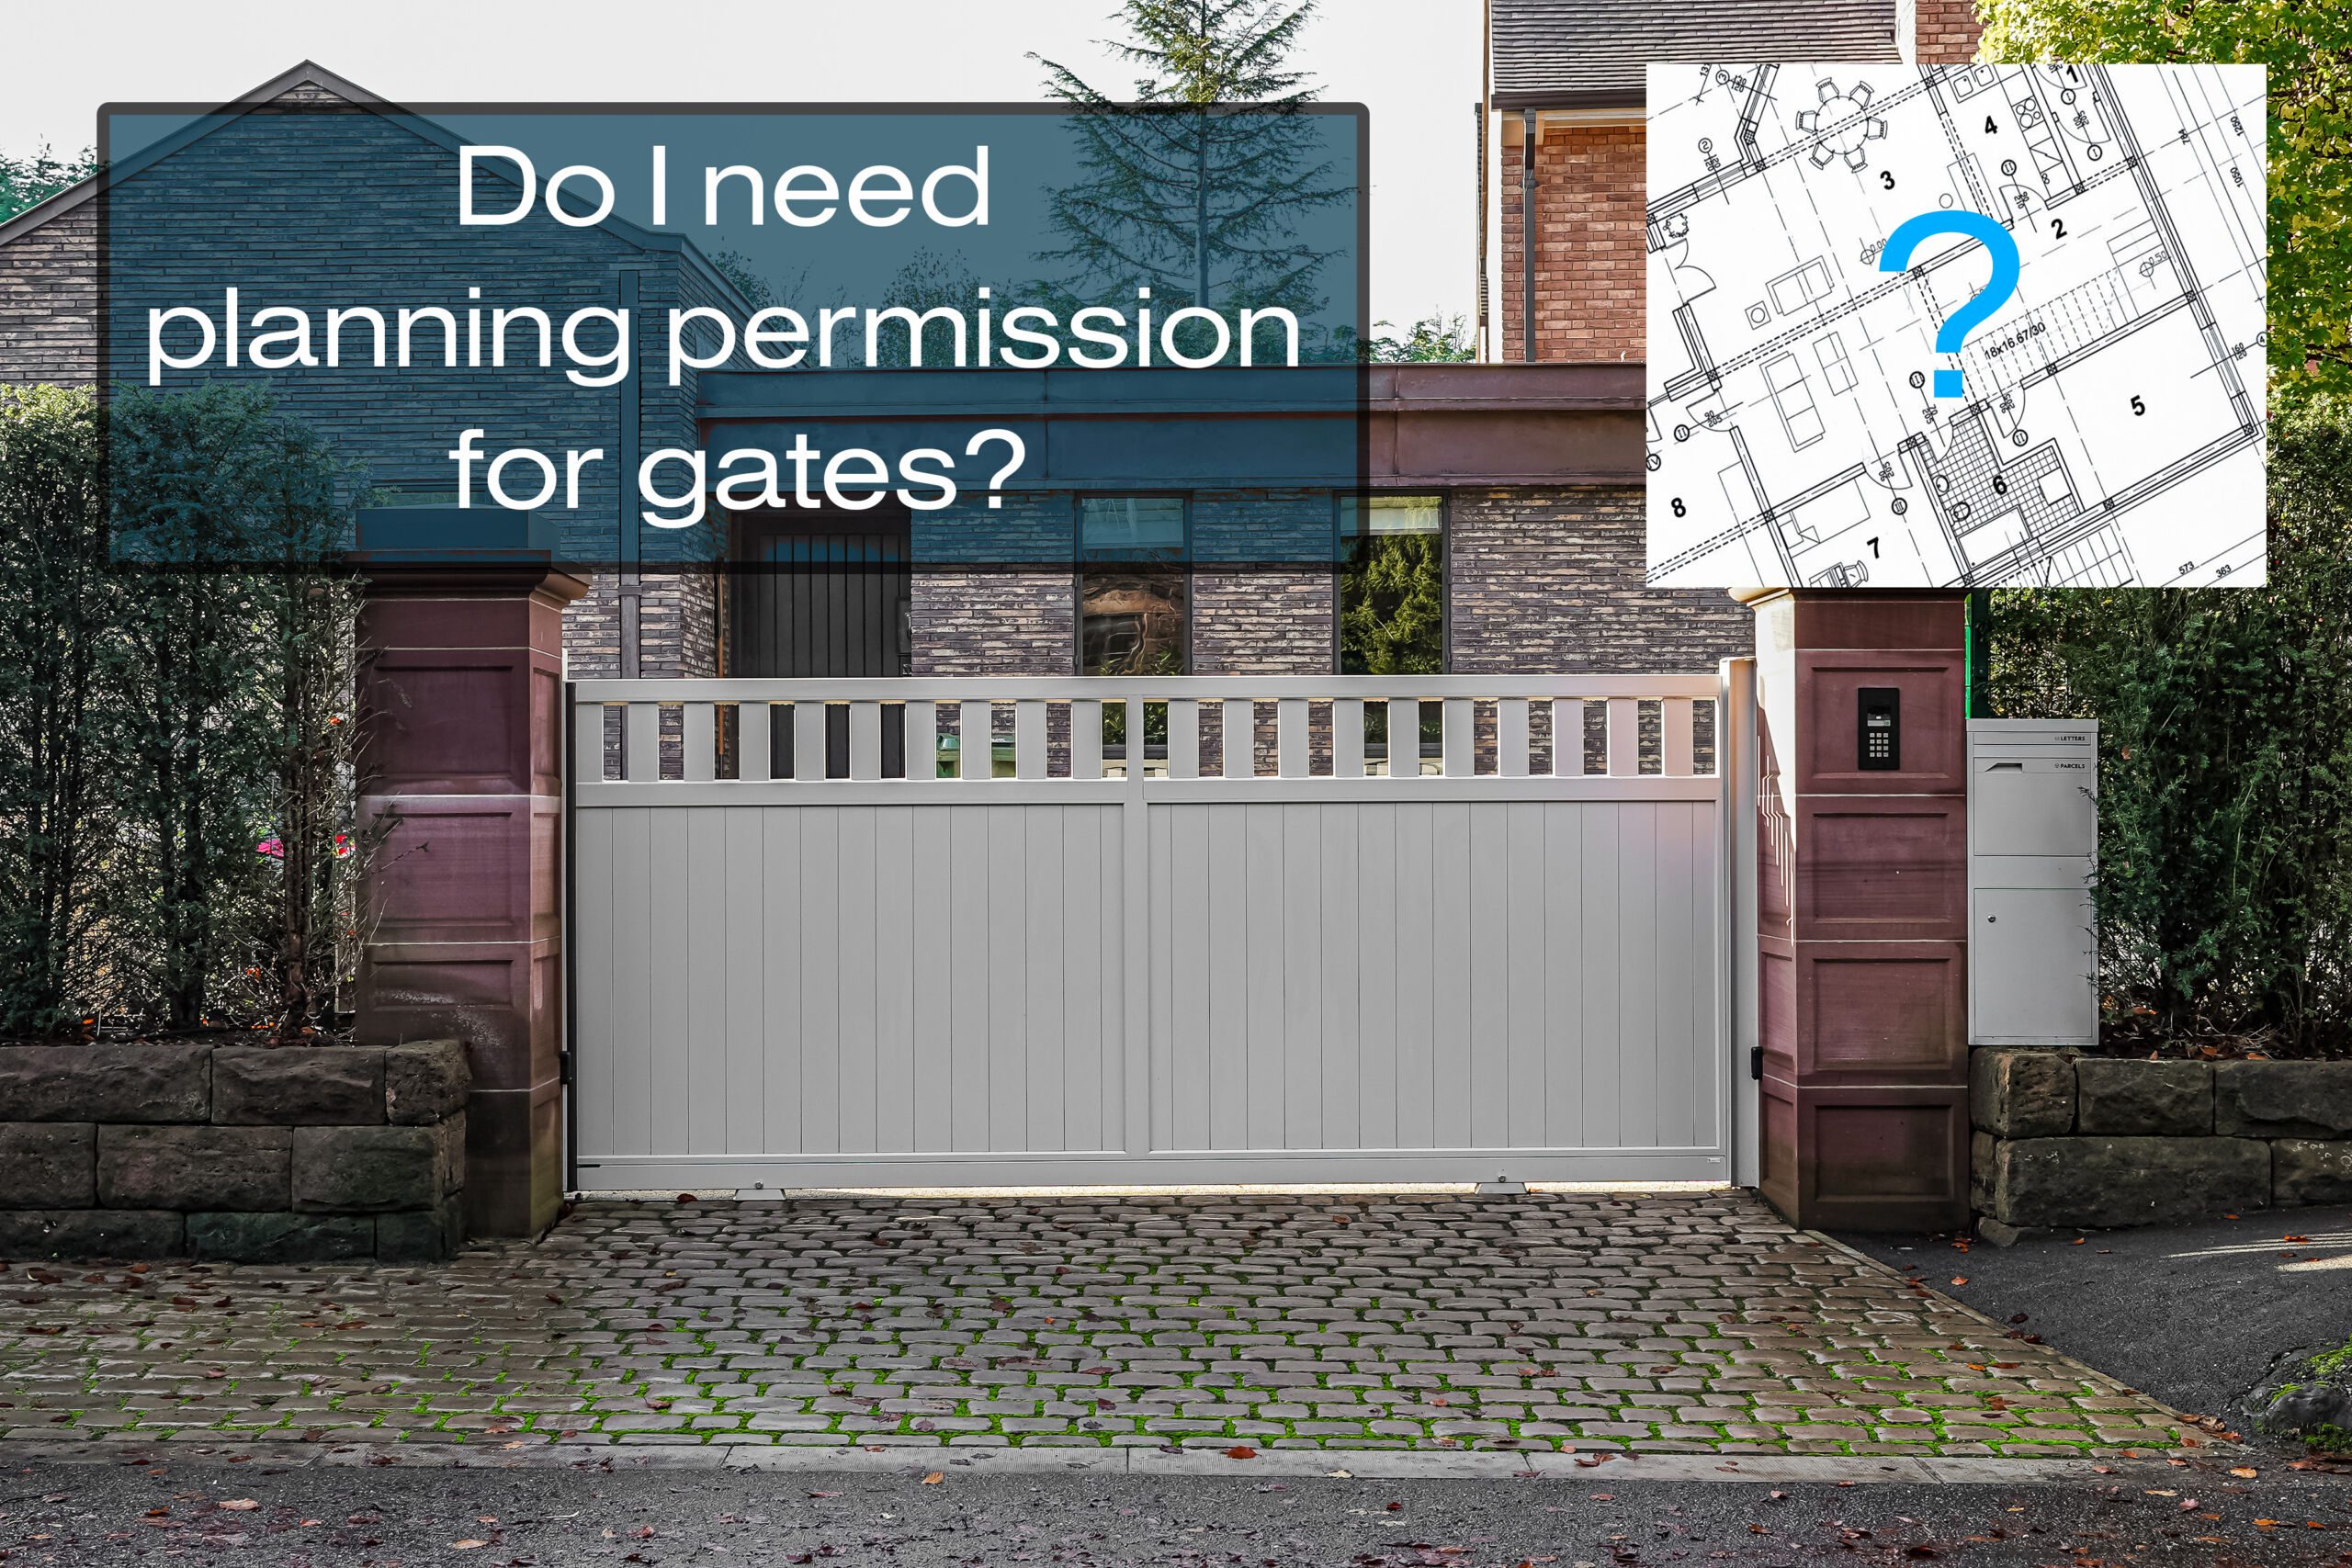 BLOGPOST HEADER - DO I NEED PLANNING PERMISSION FOR GATES?